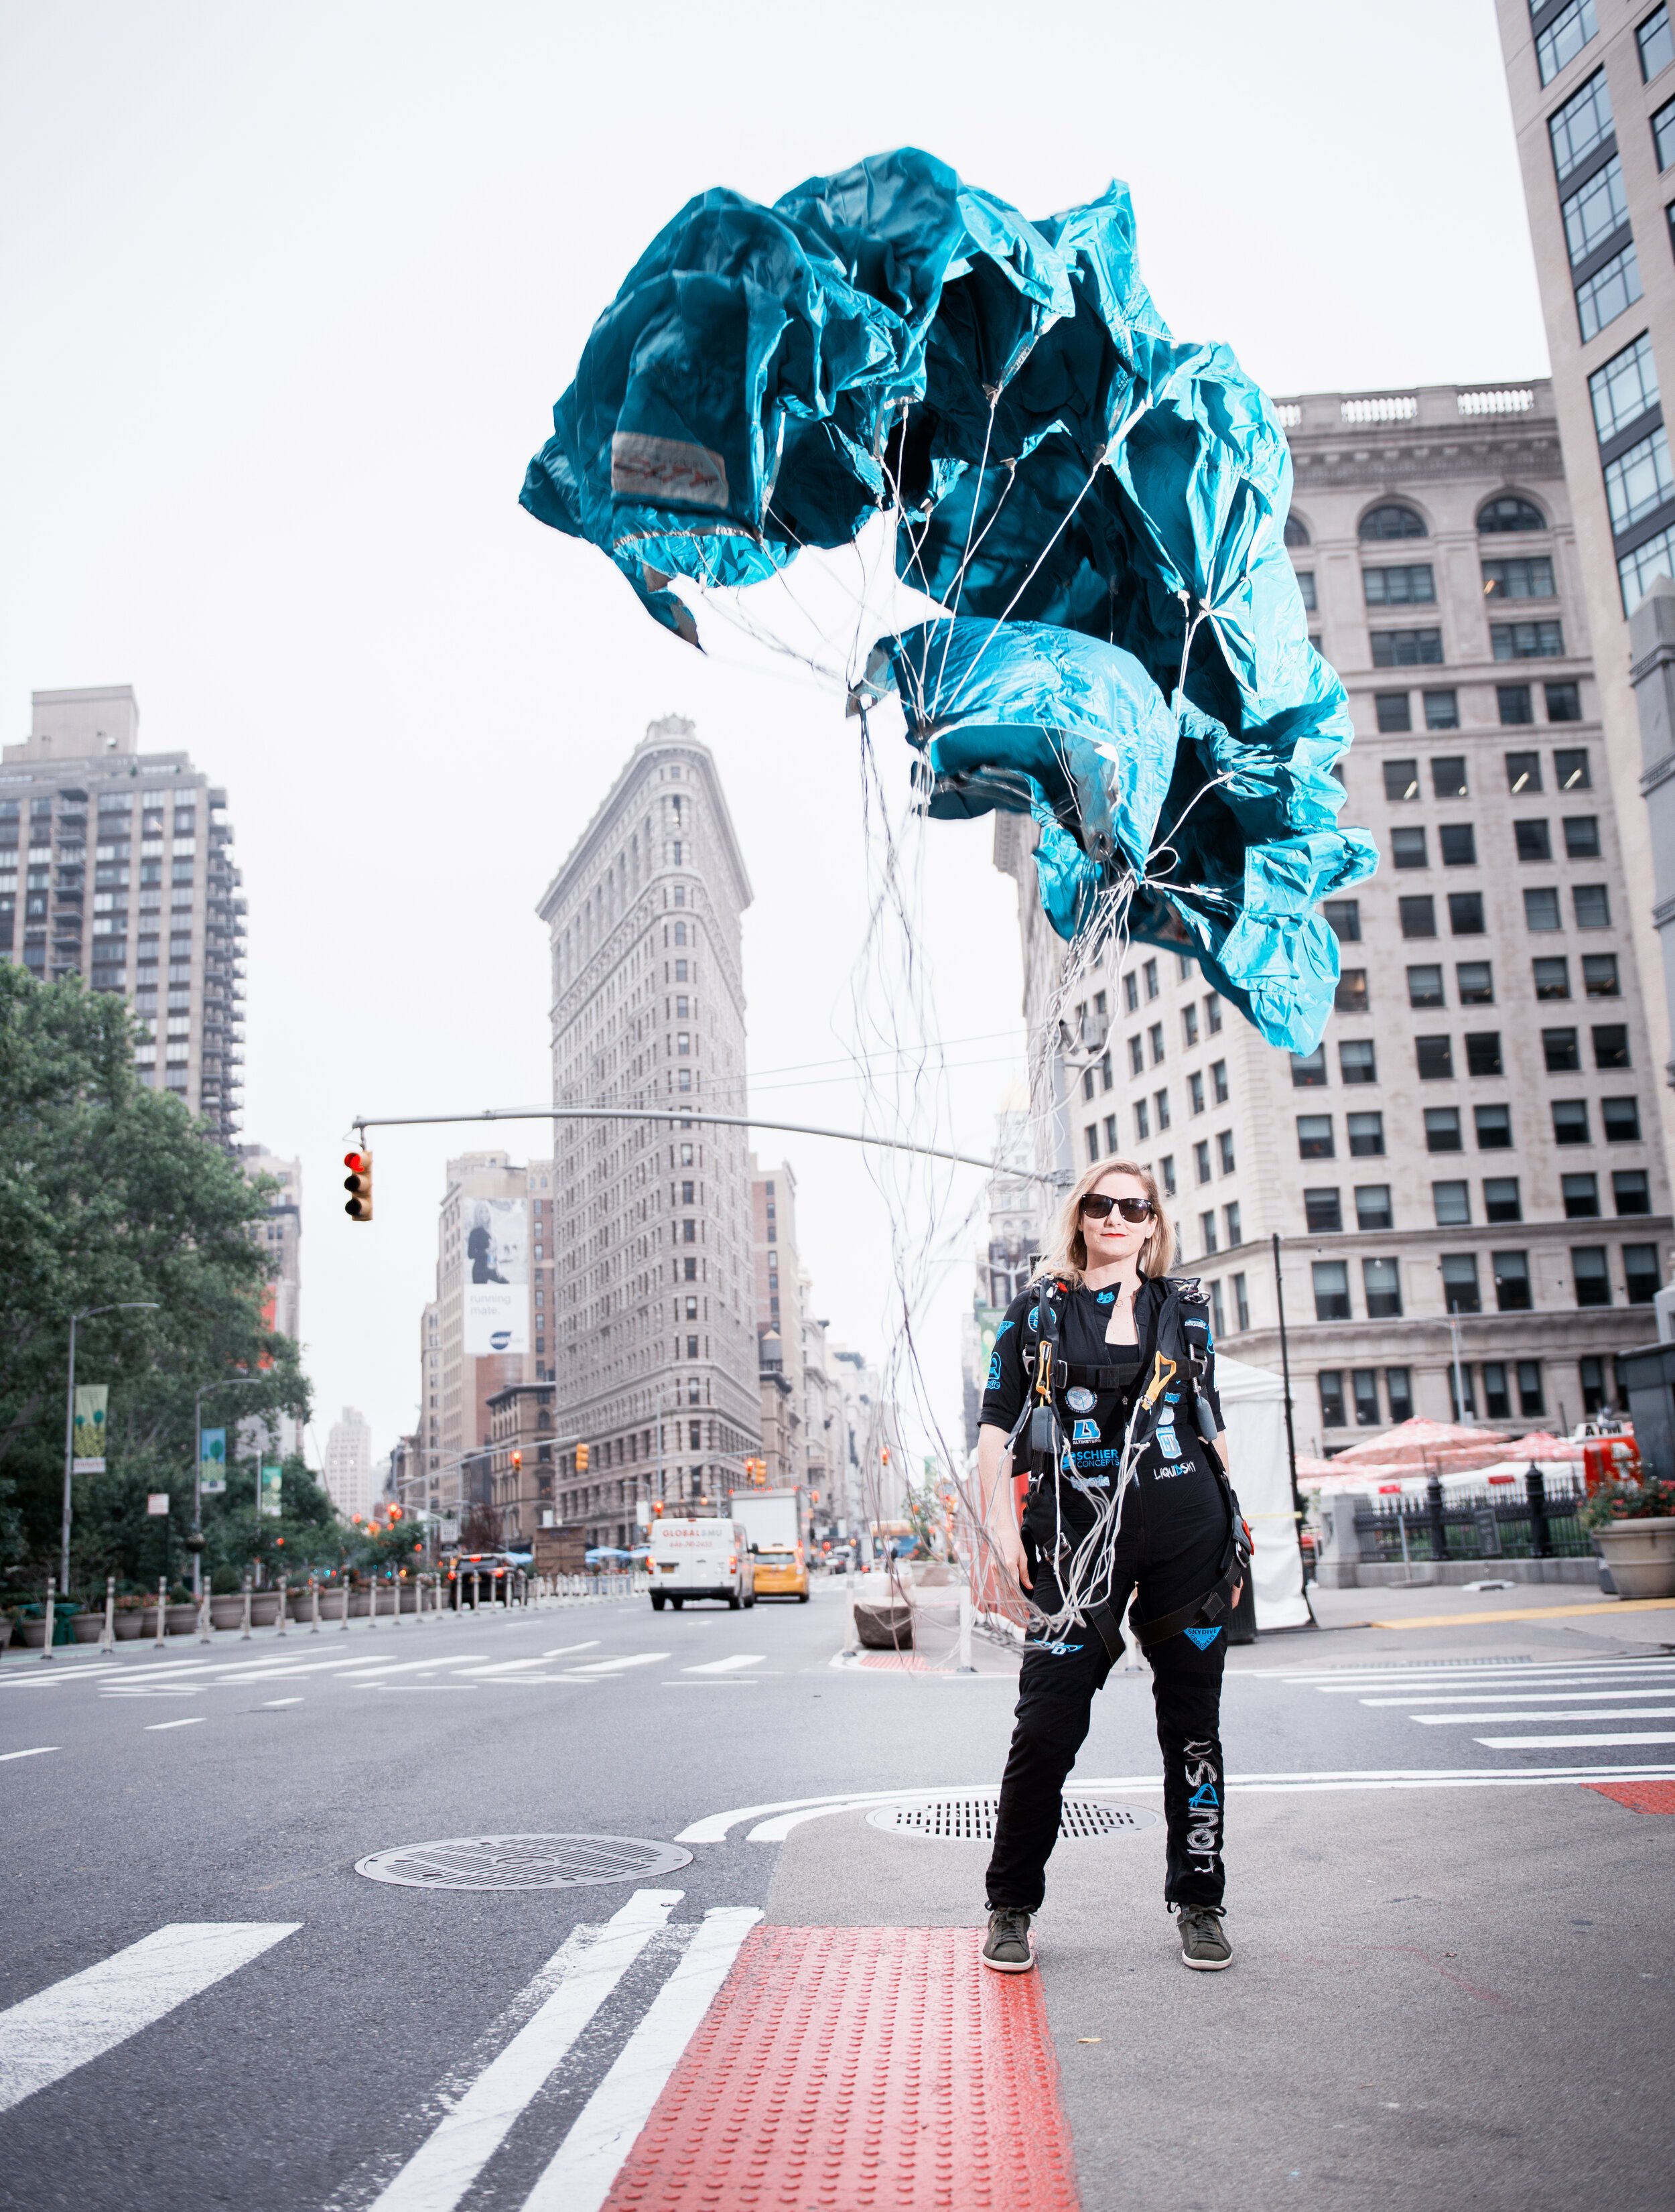 Melanie Curtis - NYC Parachute picture - Photo by Irina Leoni - high-res.jpg